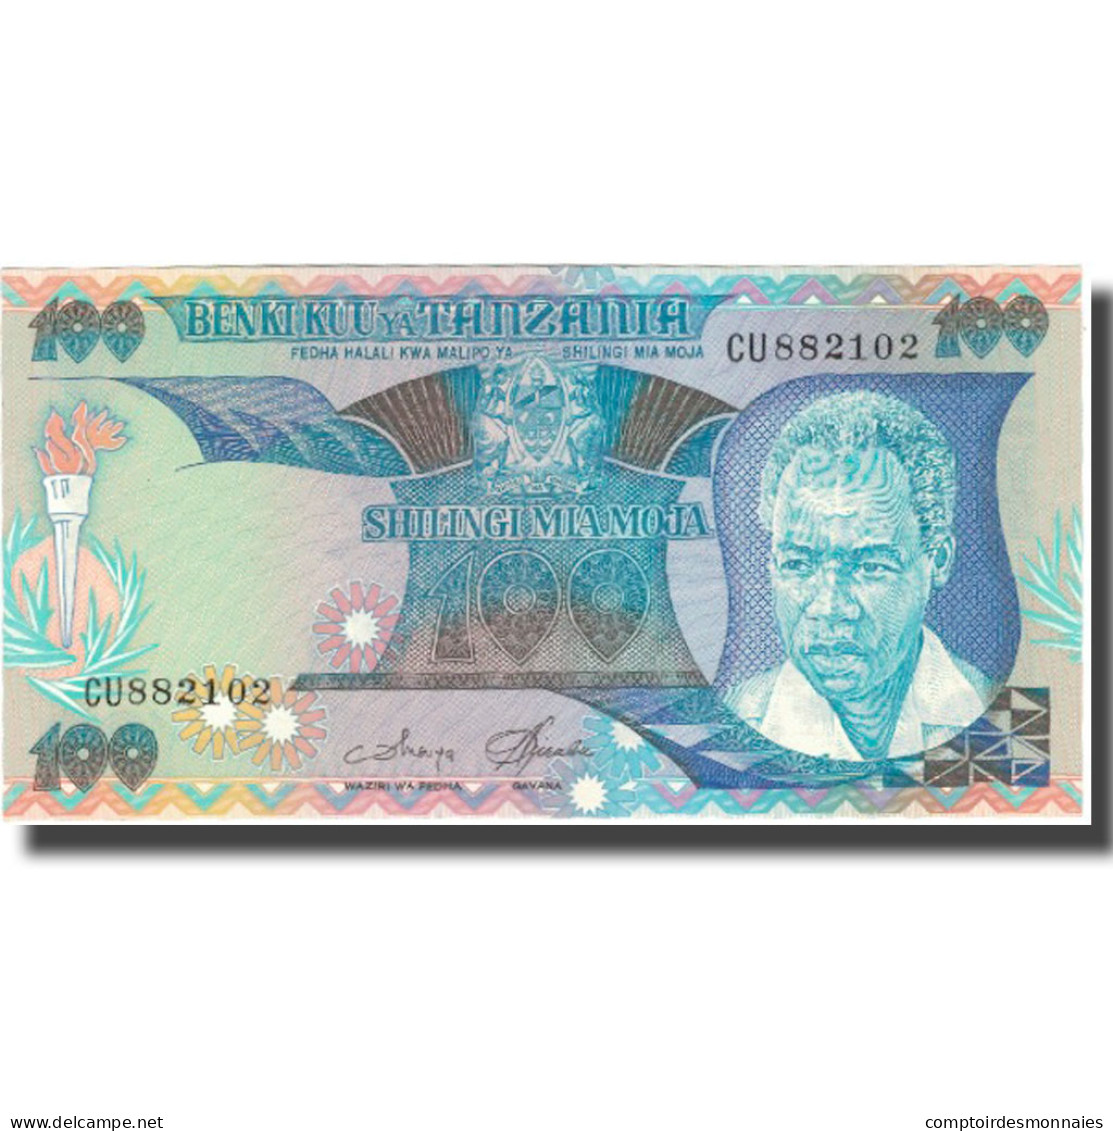 Billet, Tanzania, 100 Shilingi, Undated (1985), KM:11, NEUF - Tansania